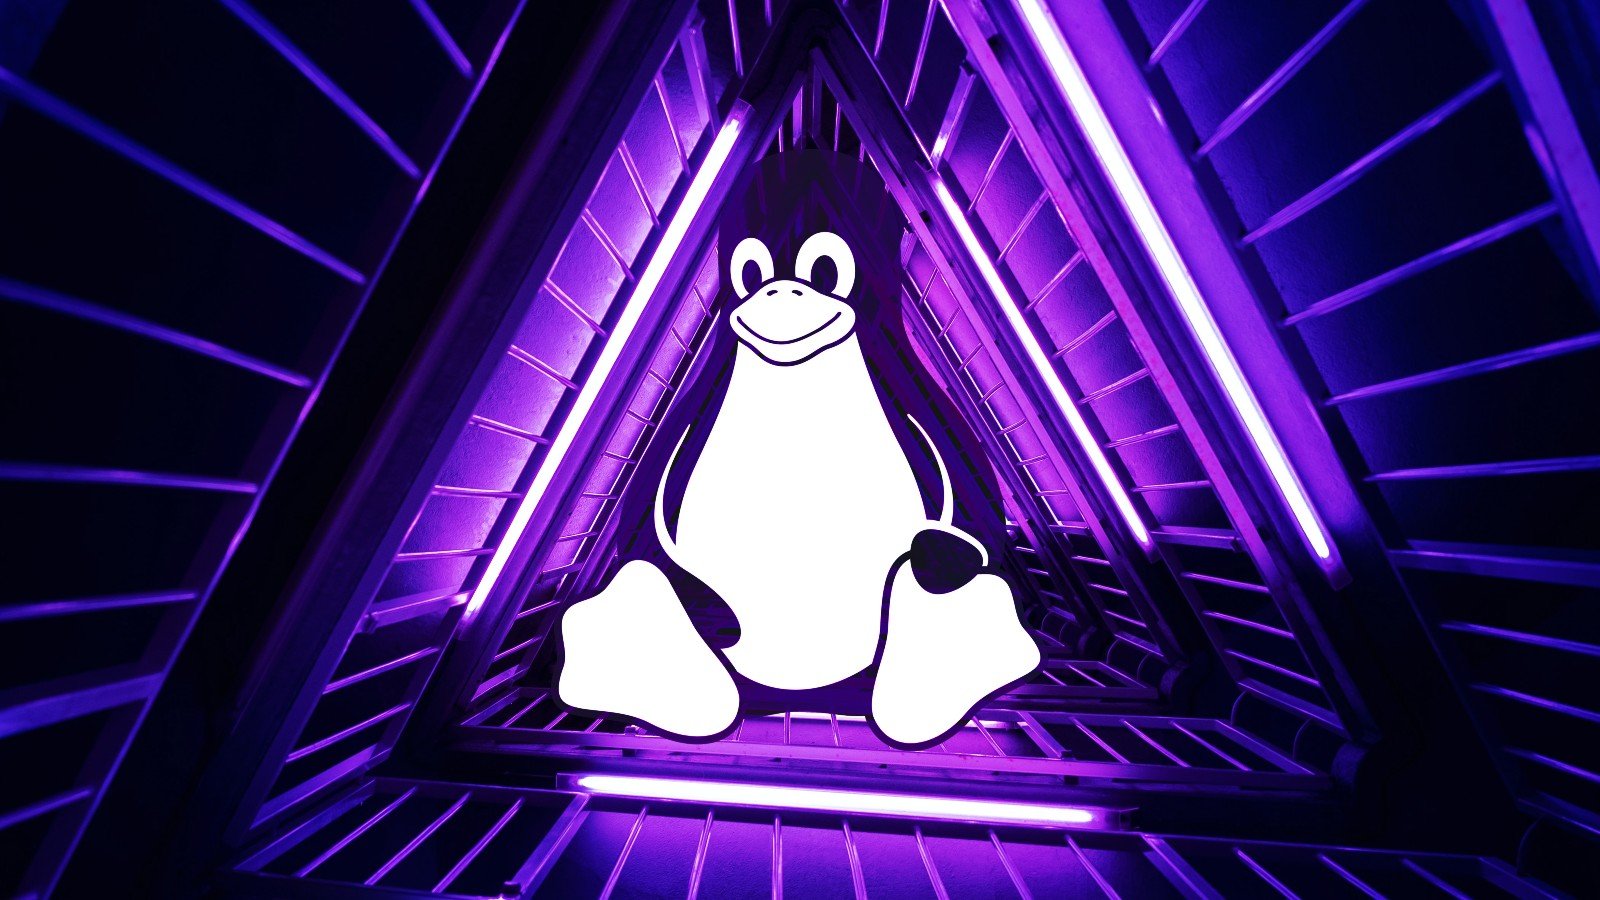 Stealthy GTPDOOR Linux malware targets mobile operator networks